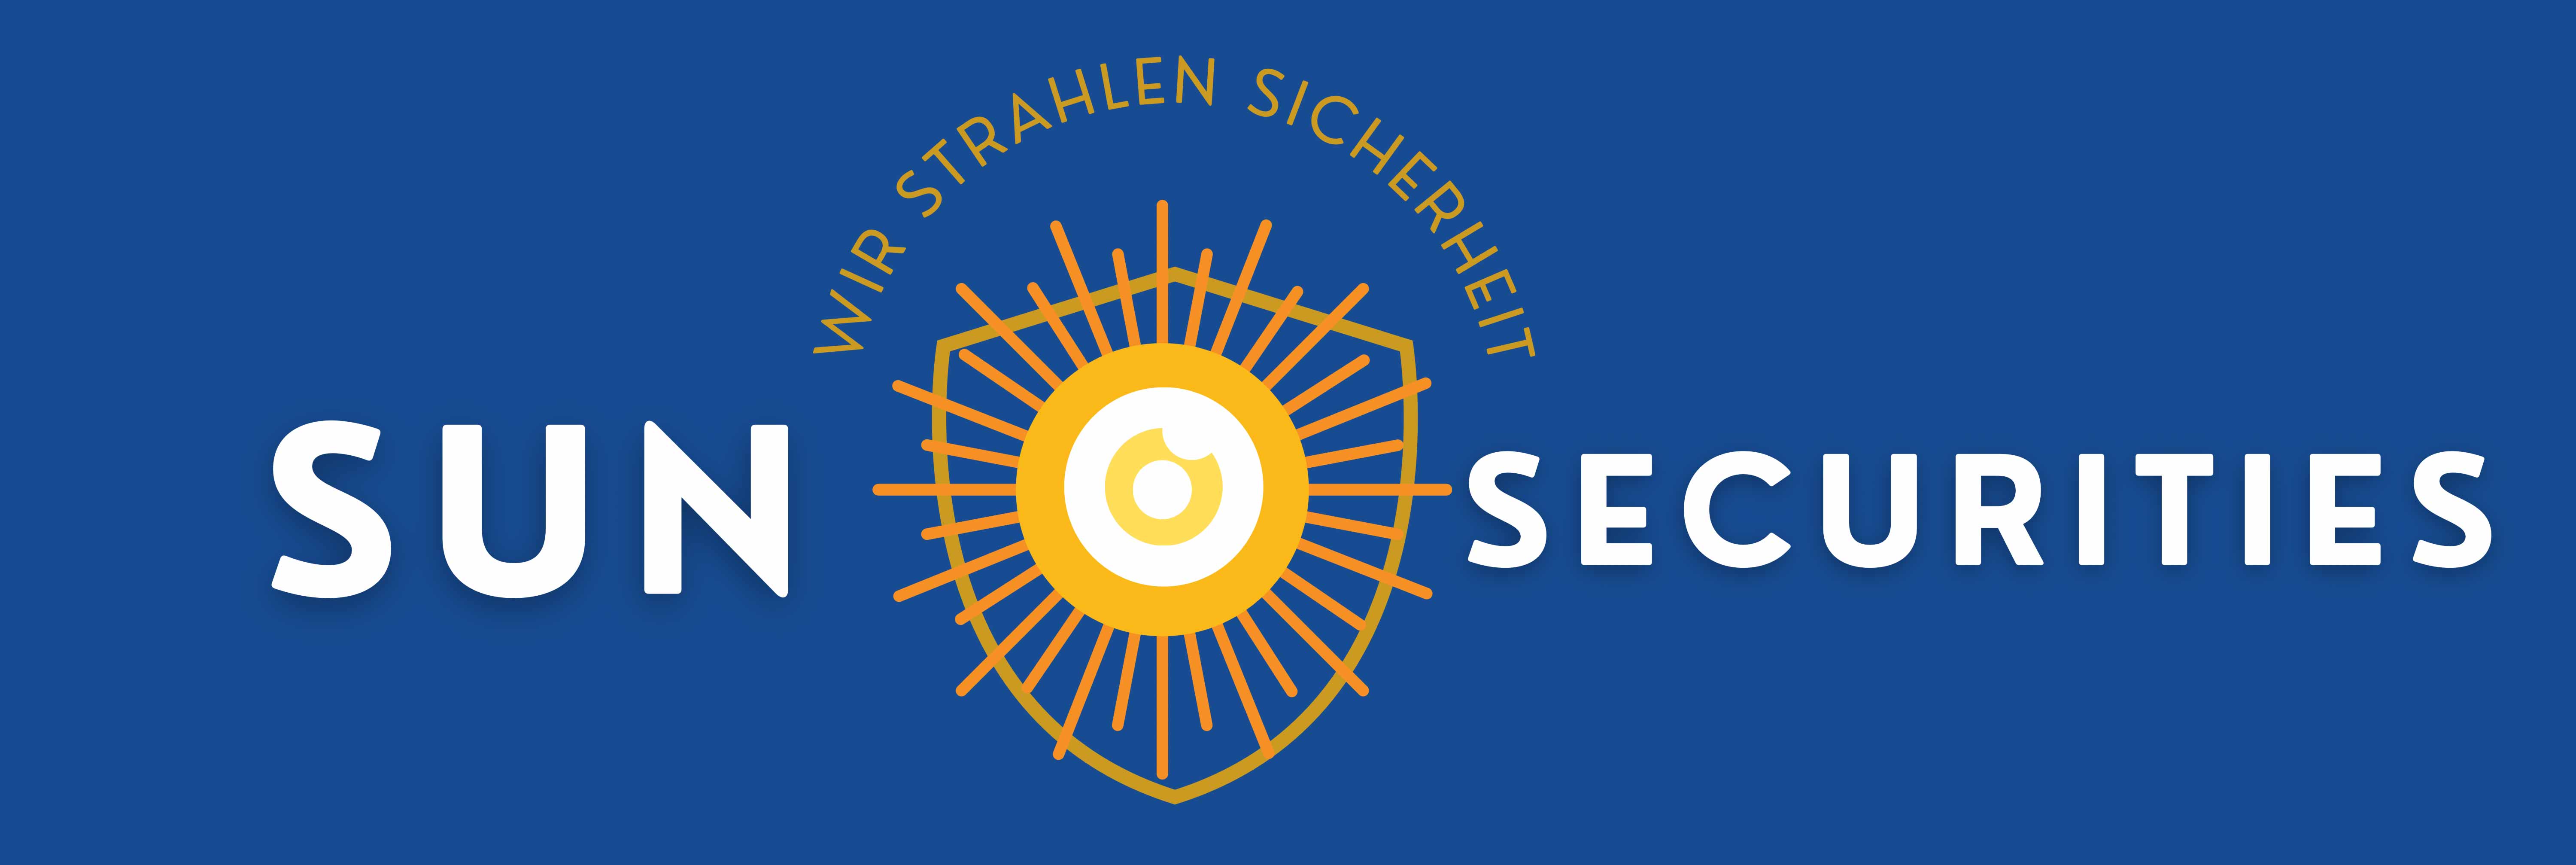 Sun Securities & Services GmbH